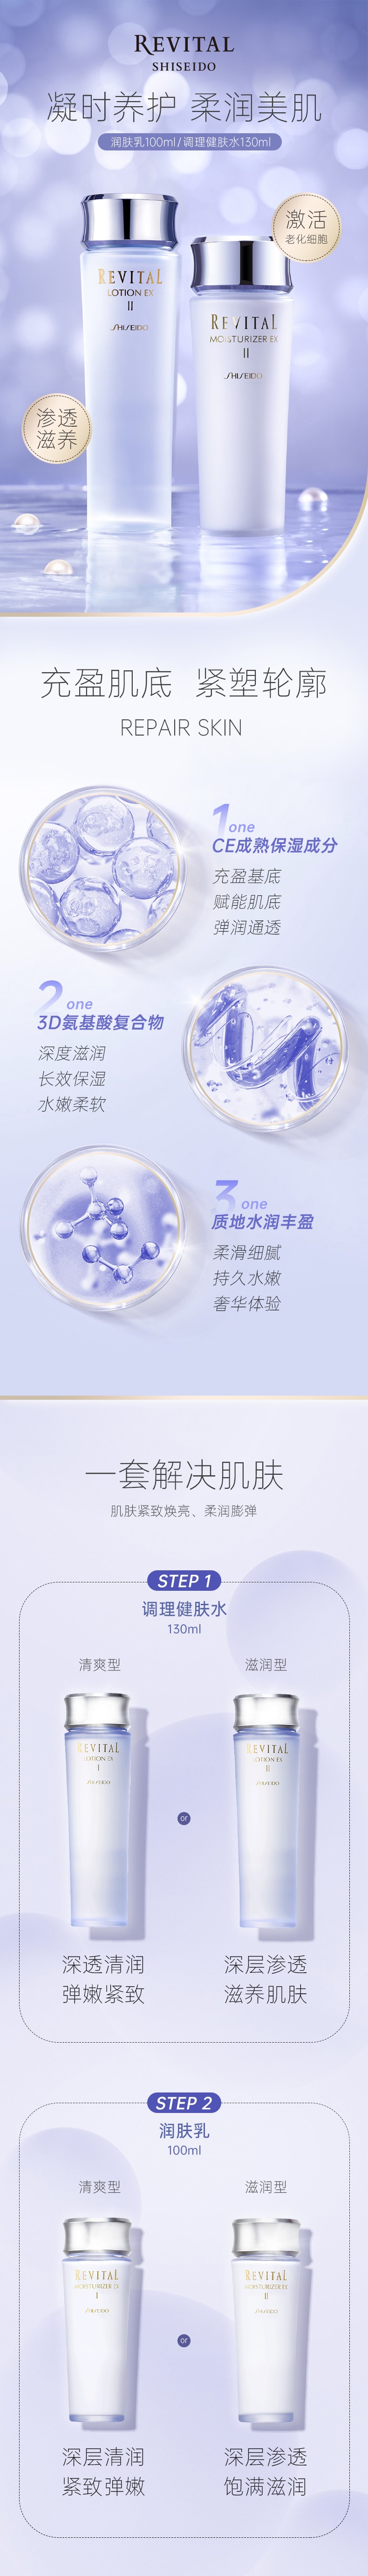 Revital Yuewei Anti-Wrinkle Firming Toner 1 130ml